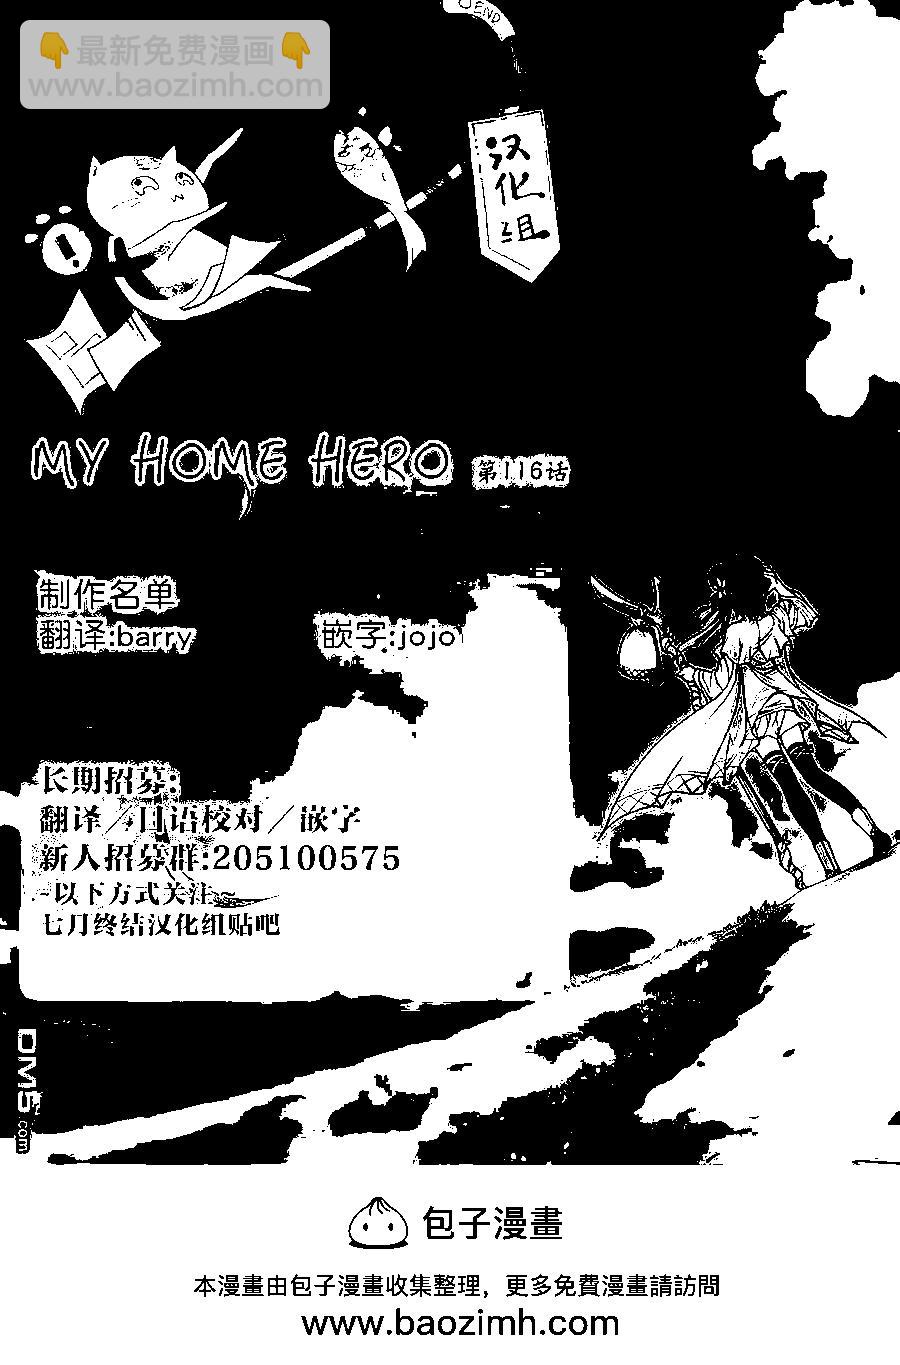 MY HOME HERO - 第116話 天罰 - 1